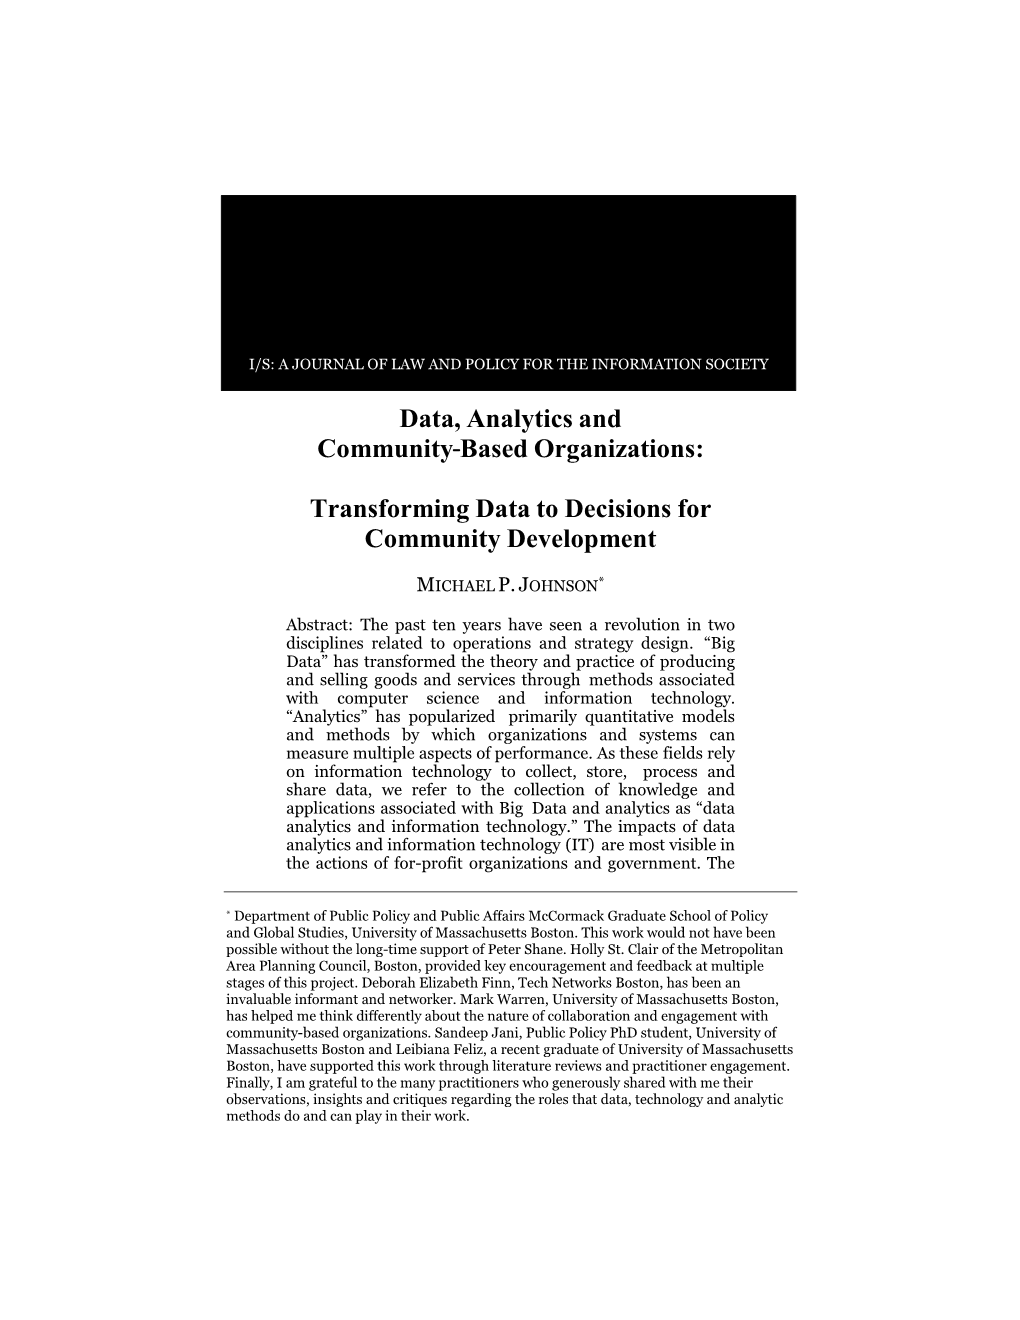 Data, Analytics and Community&gt;Based Organizations